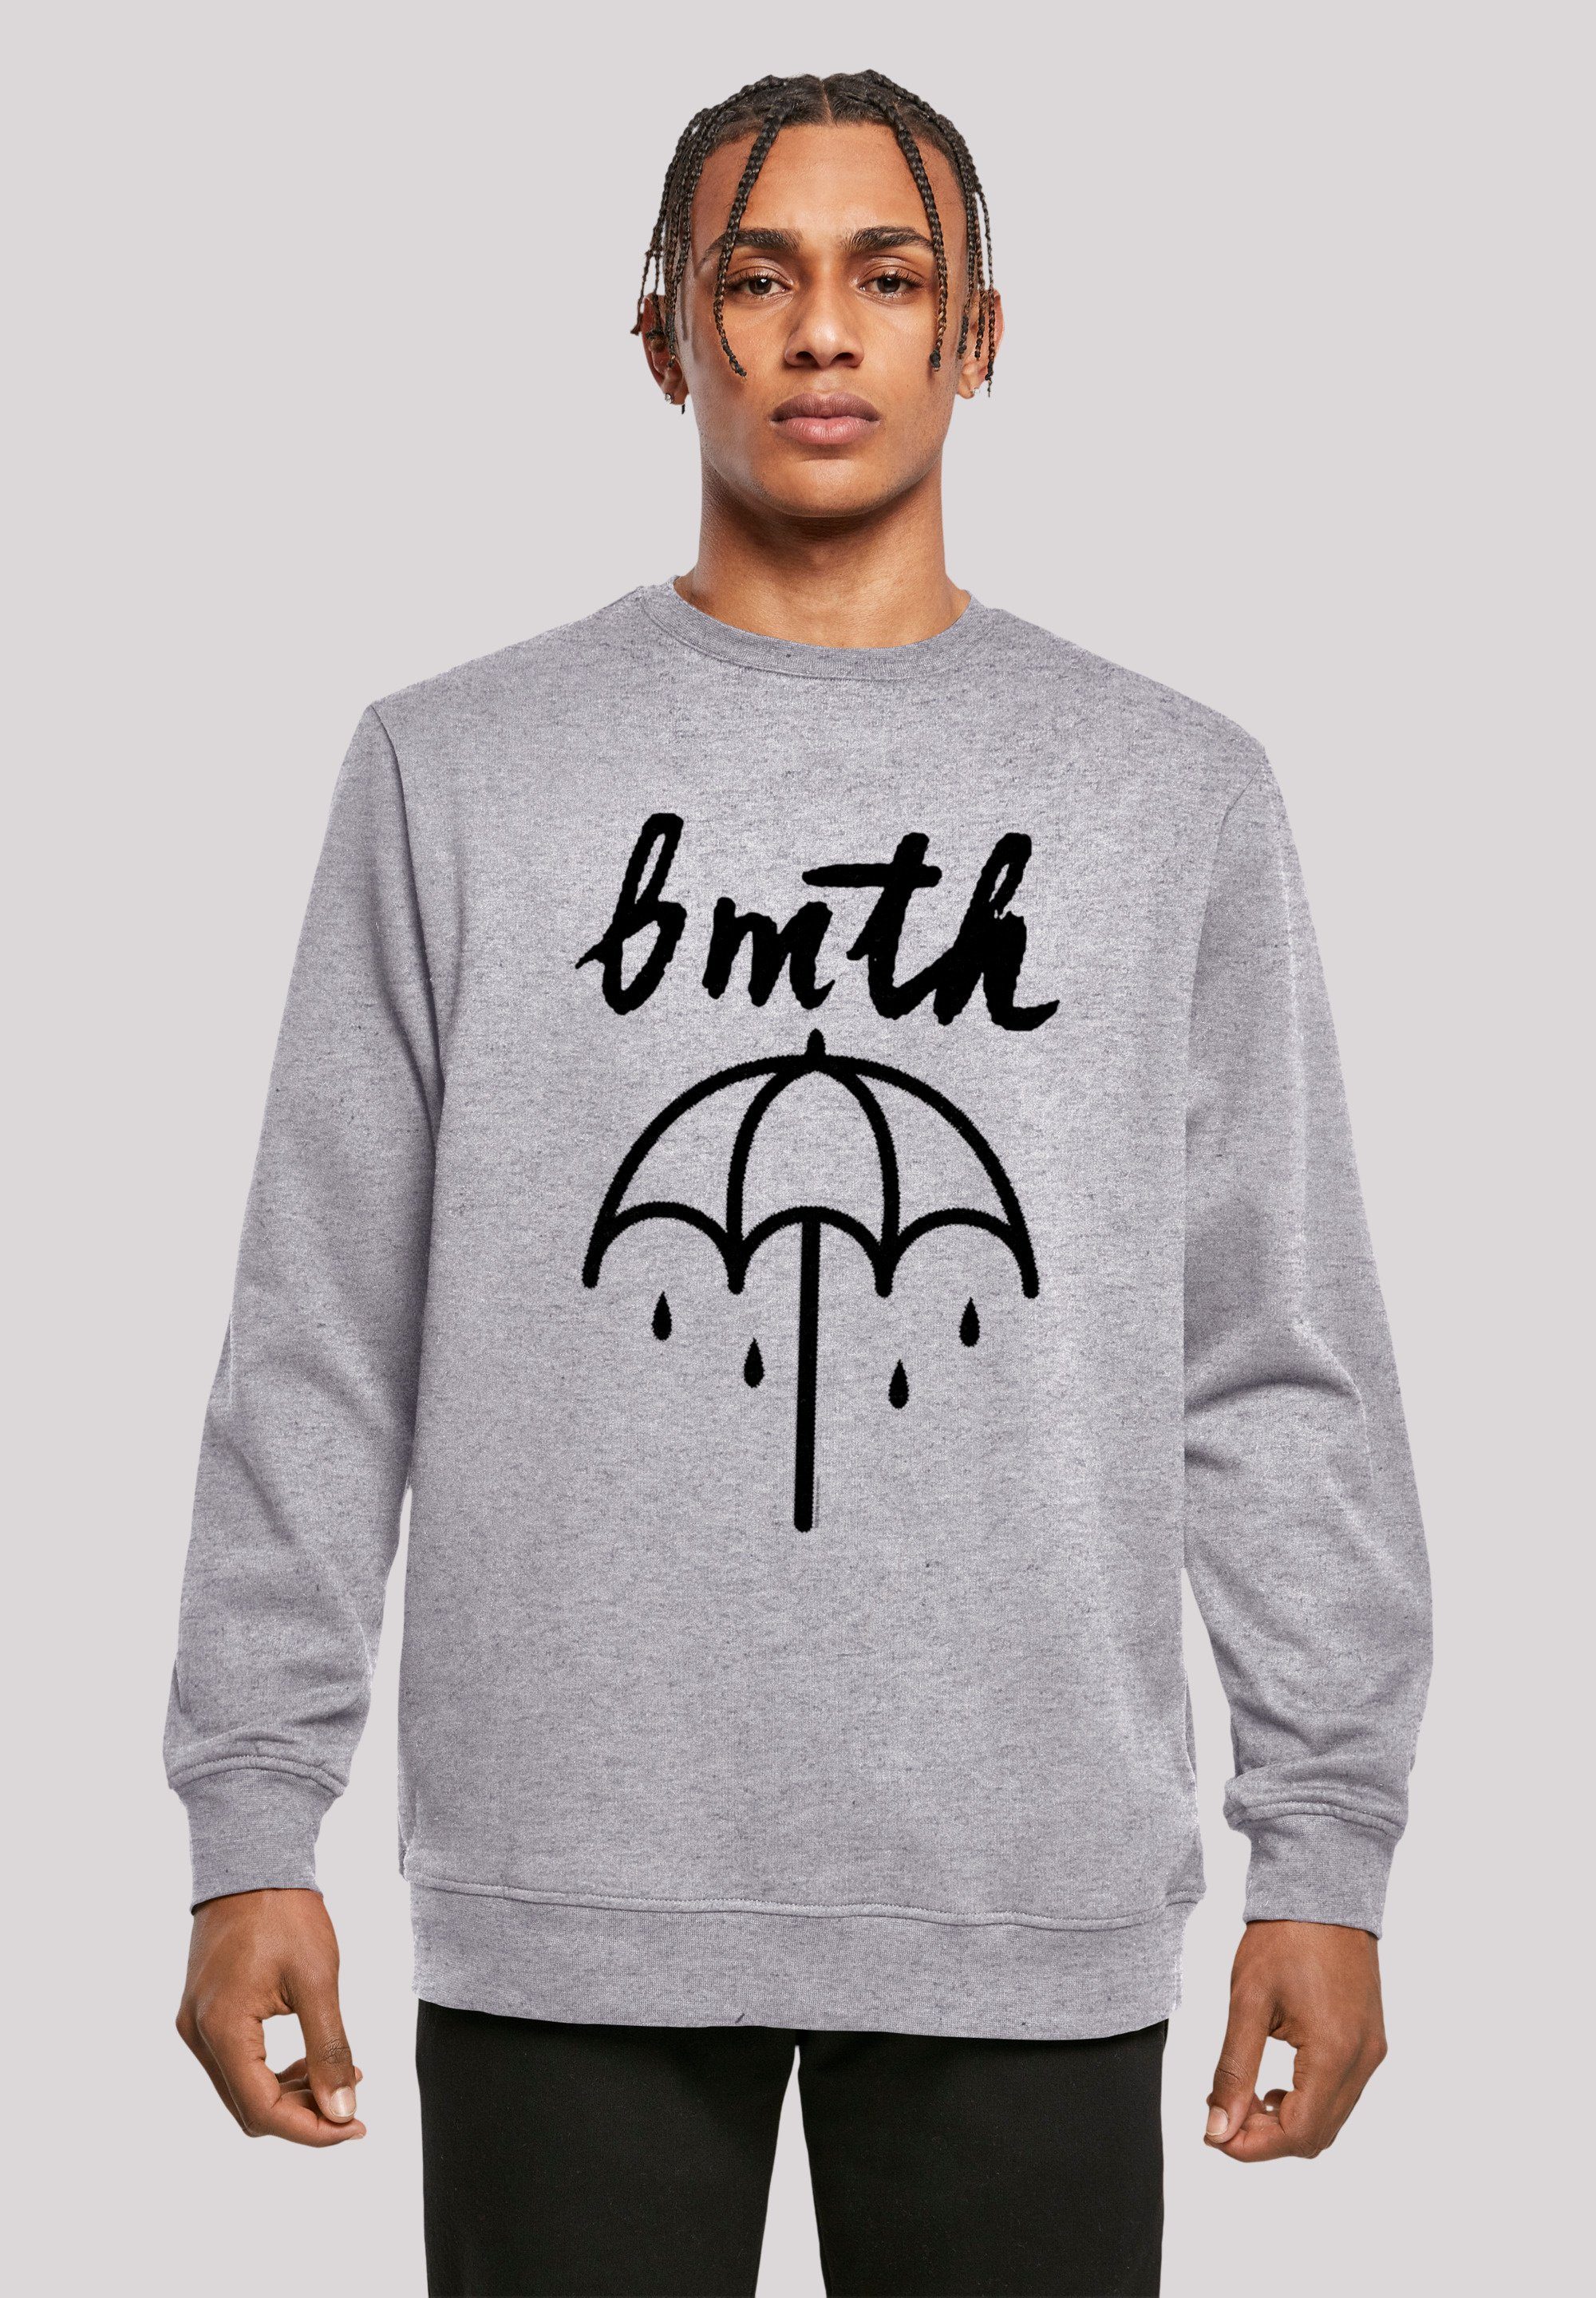 BMTH F4NT4STIC Premium Sweatshirt Band Metal Qualität, Band Umbrella Rock-Musik,